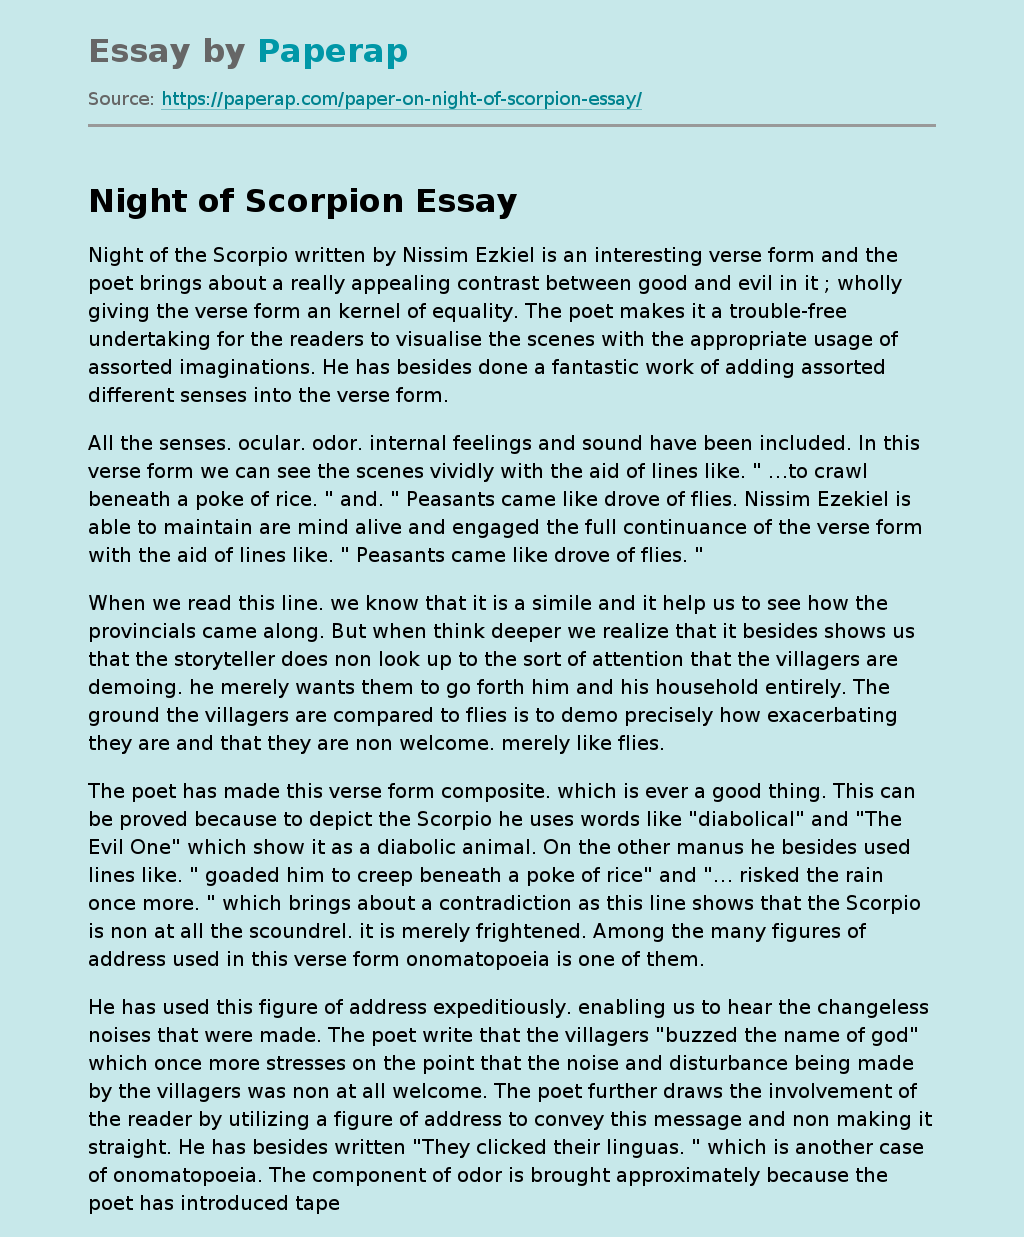 Night of Scorpion